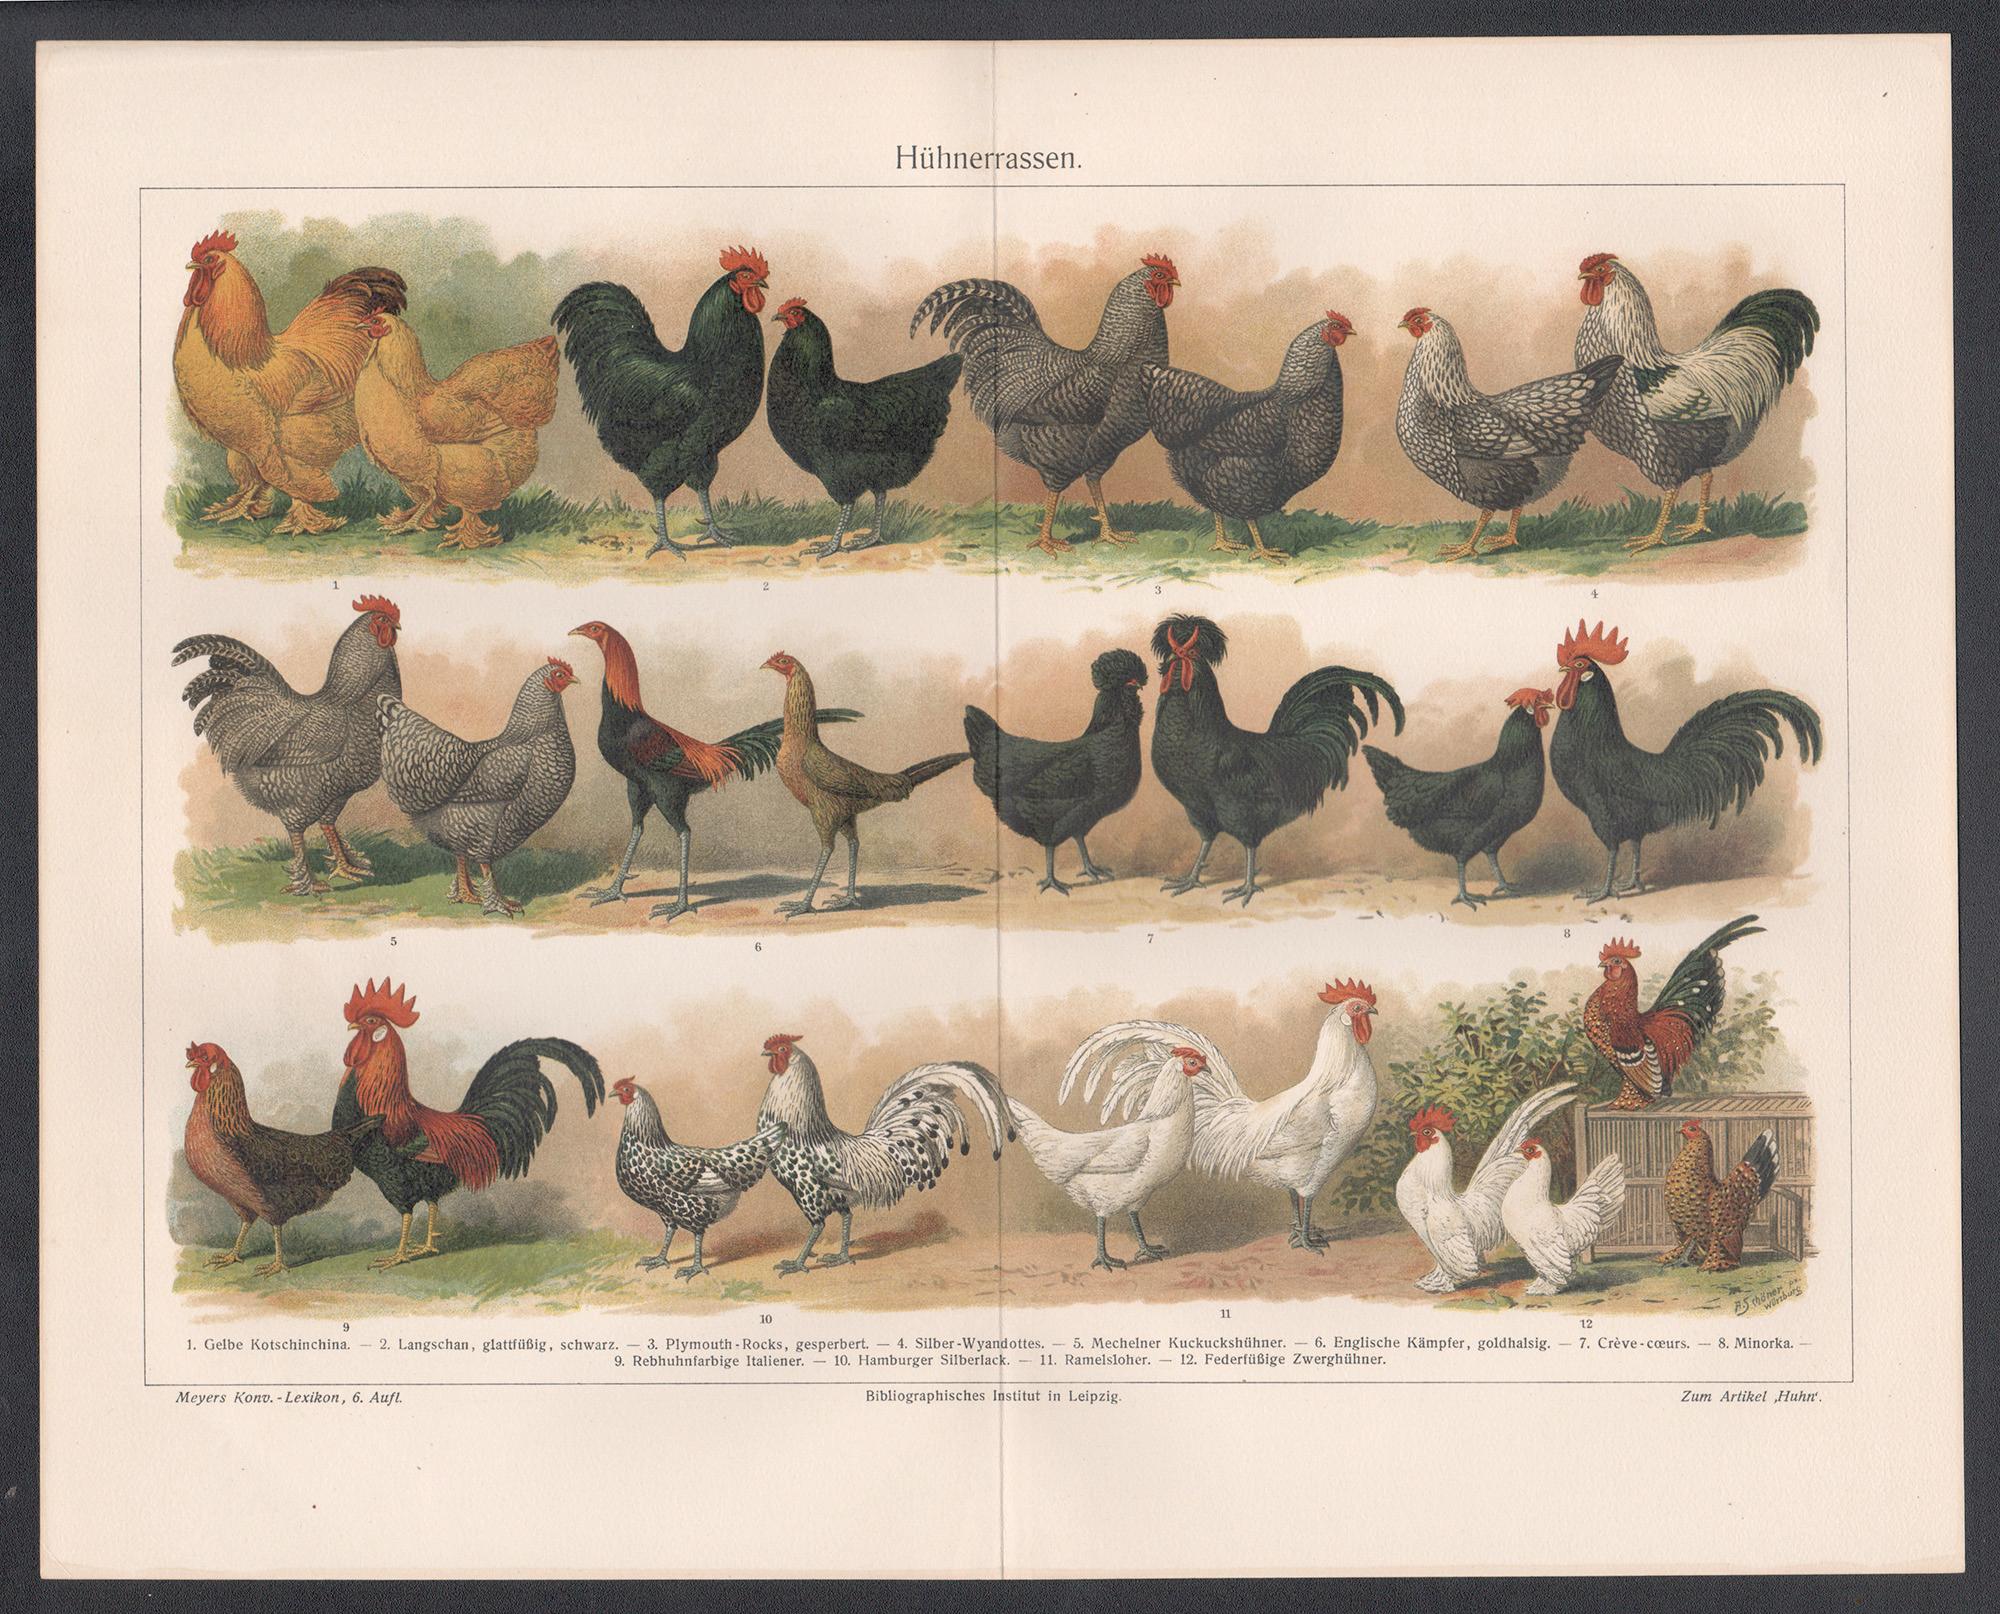 Huhnerrassen (Poultry Breeds), German antique chicken bird chromolithograph - Print by Unknown